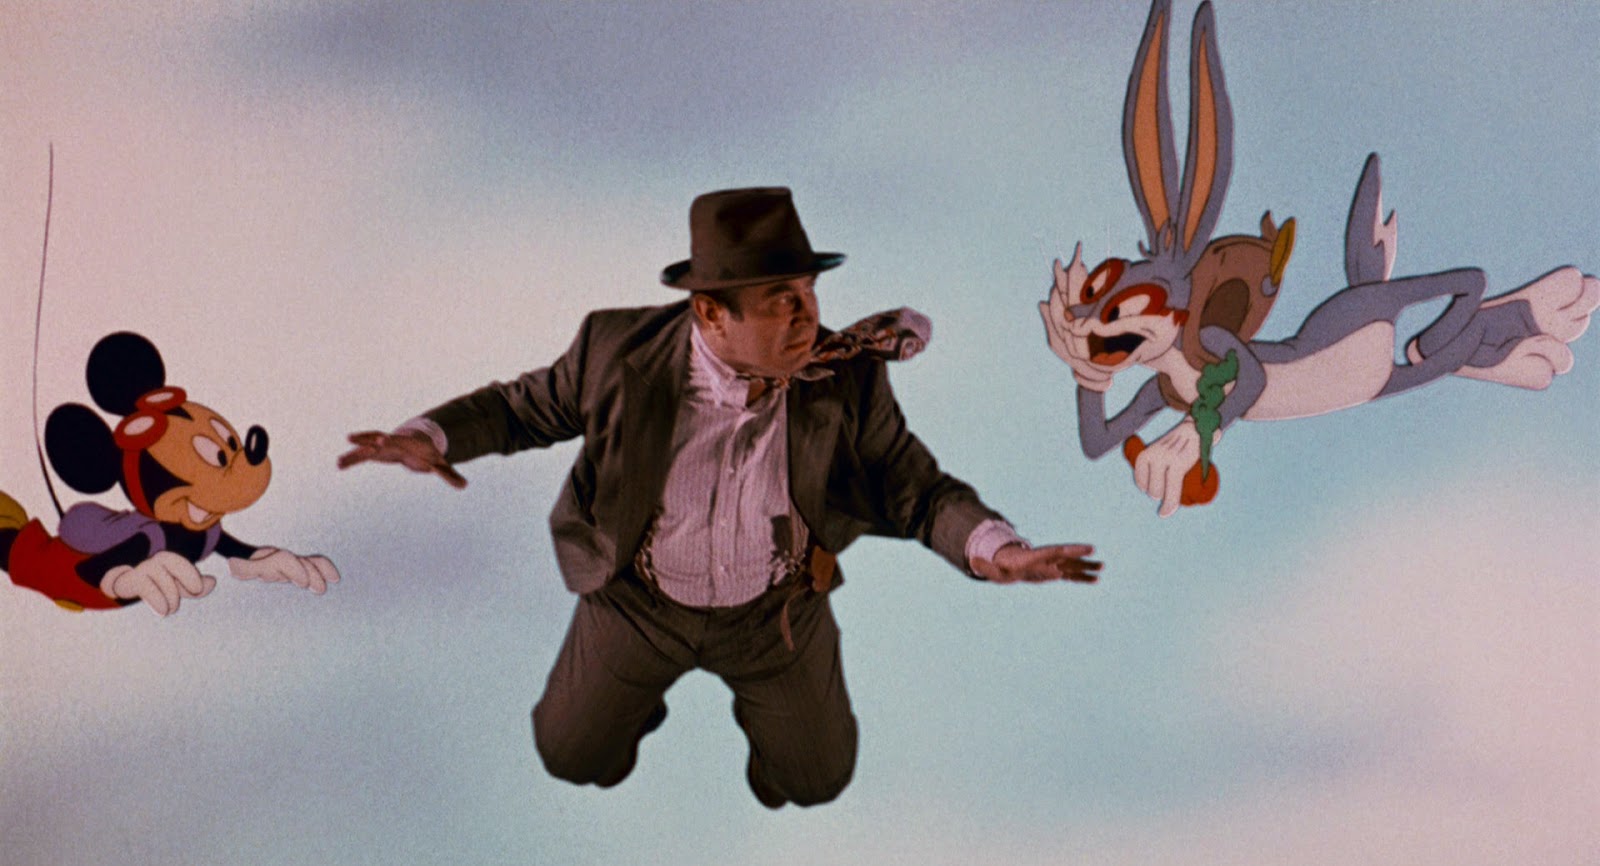 "Who Framed Roger Rabbit" HD Screen Captures - Part 2.